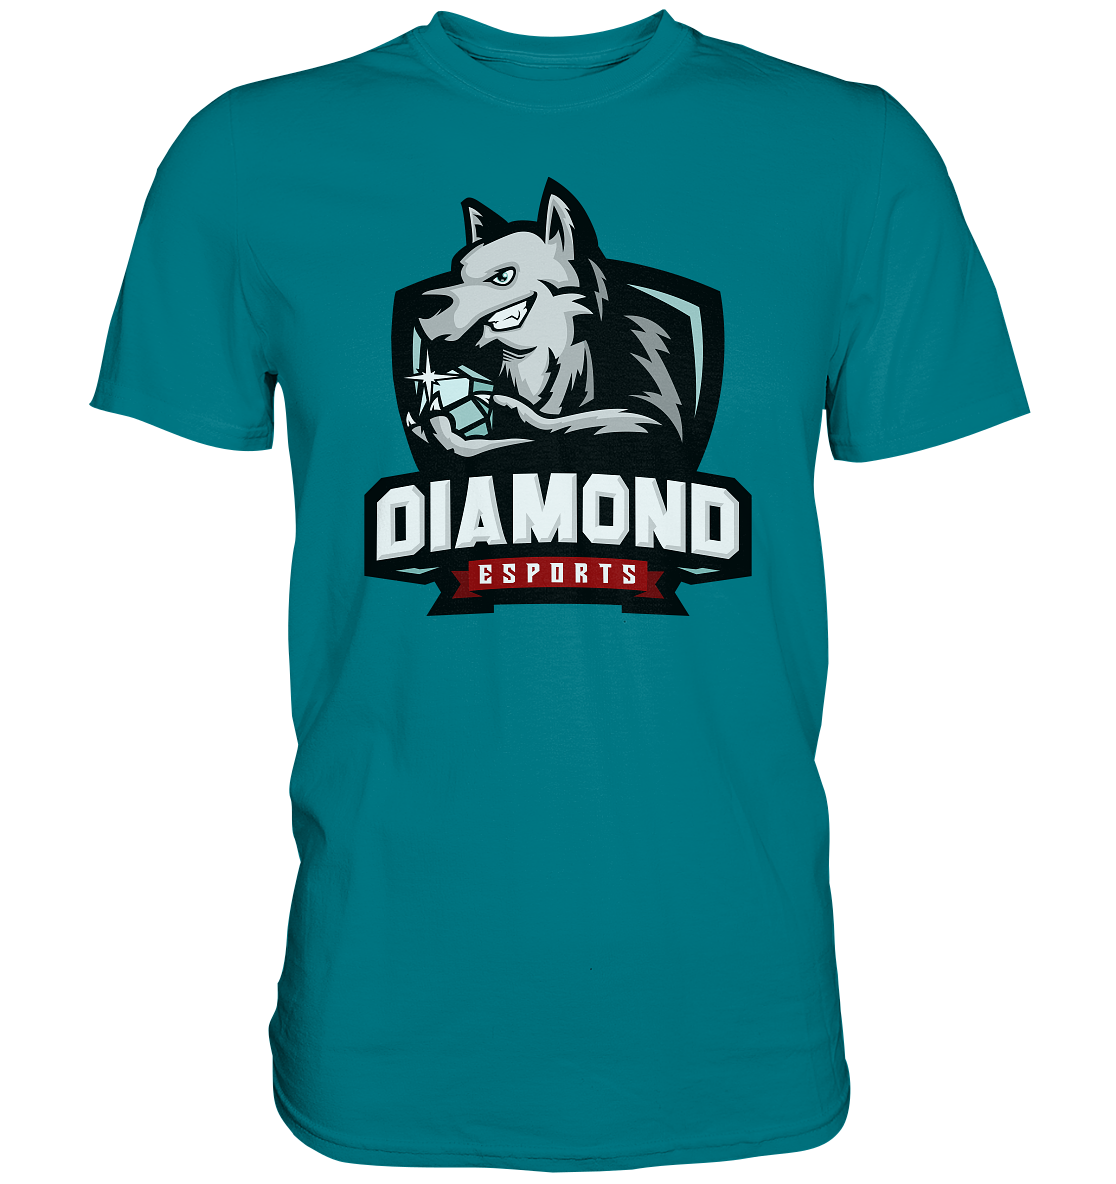 DIAMOND ESPORTS - Basic Shirt